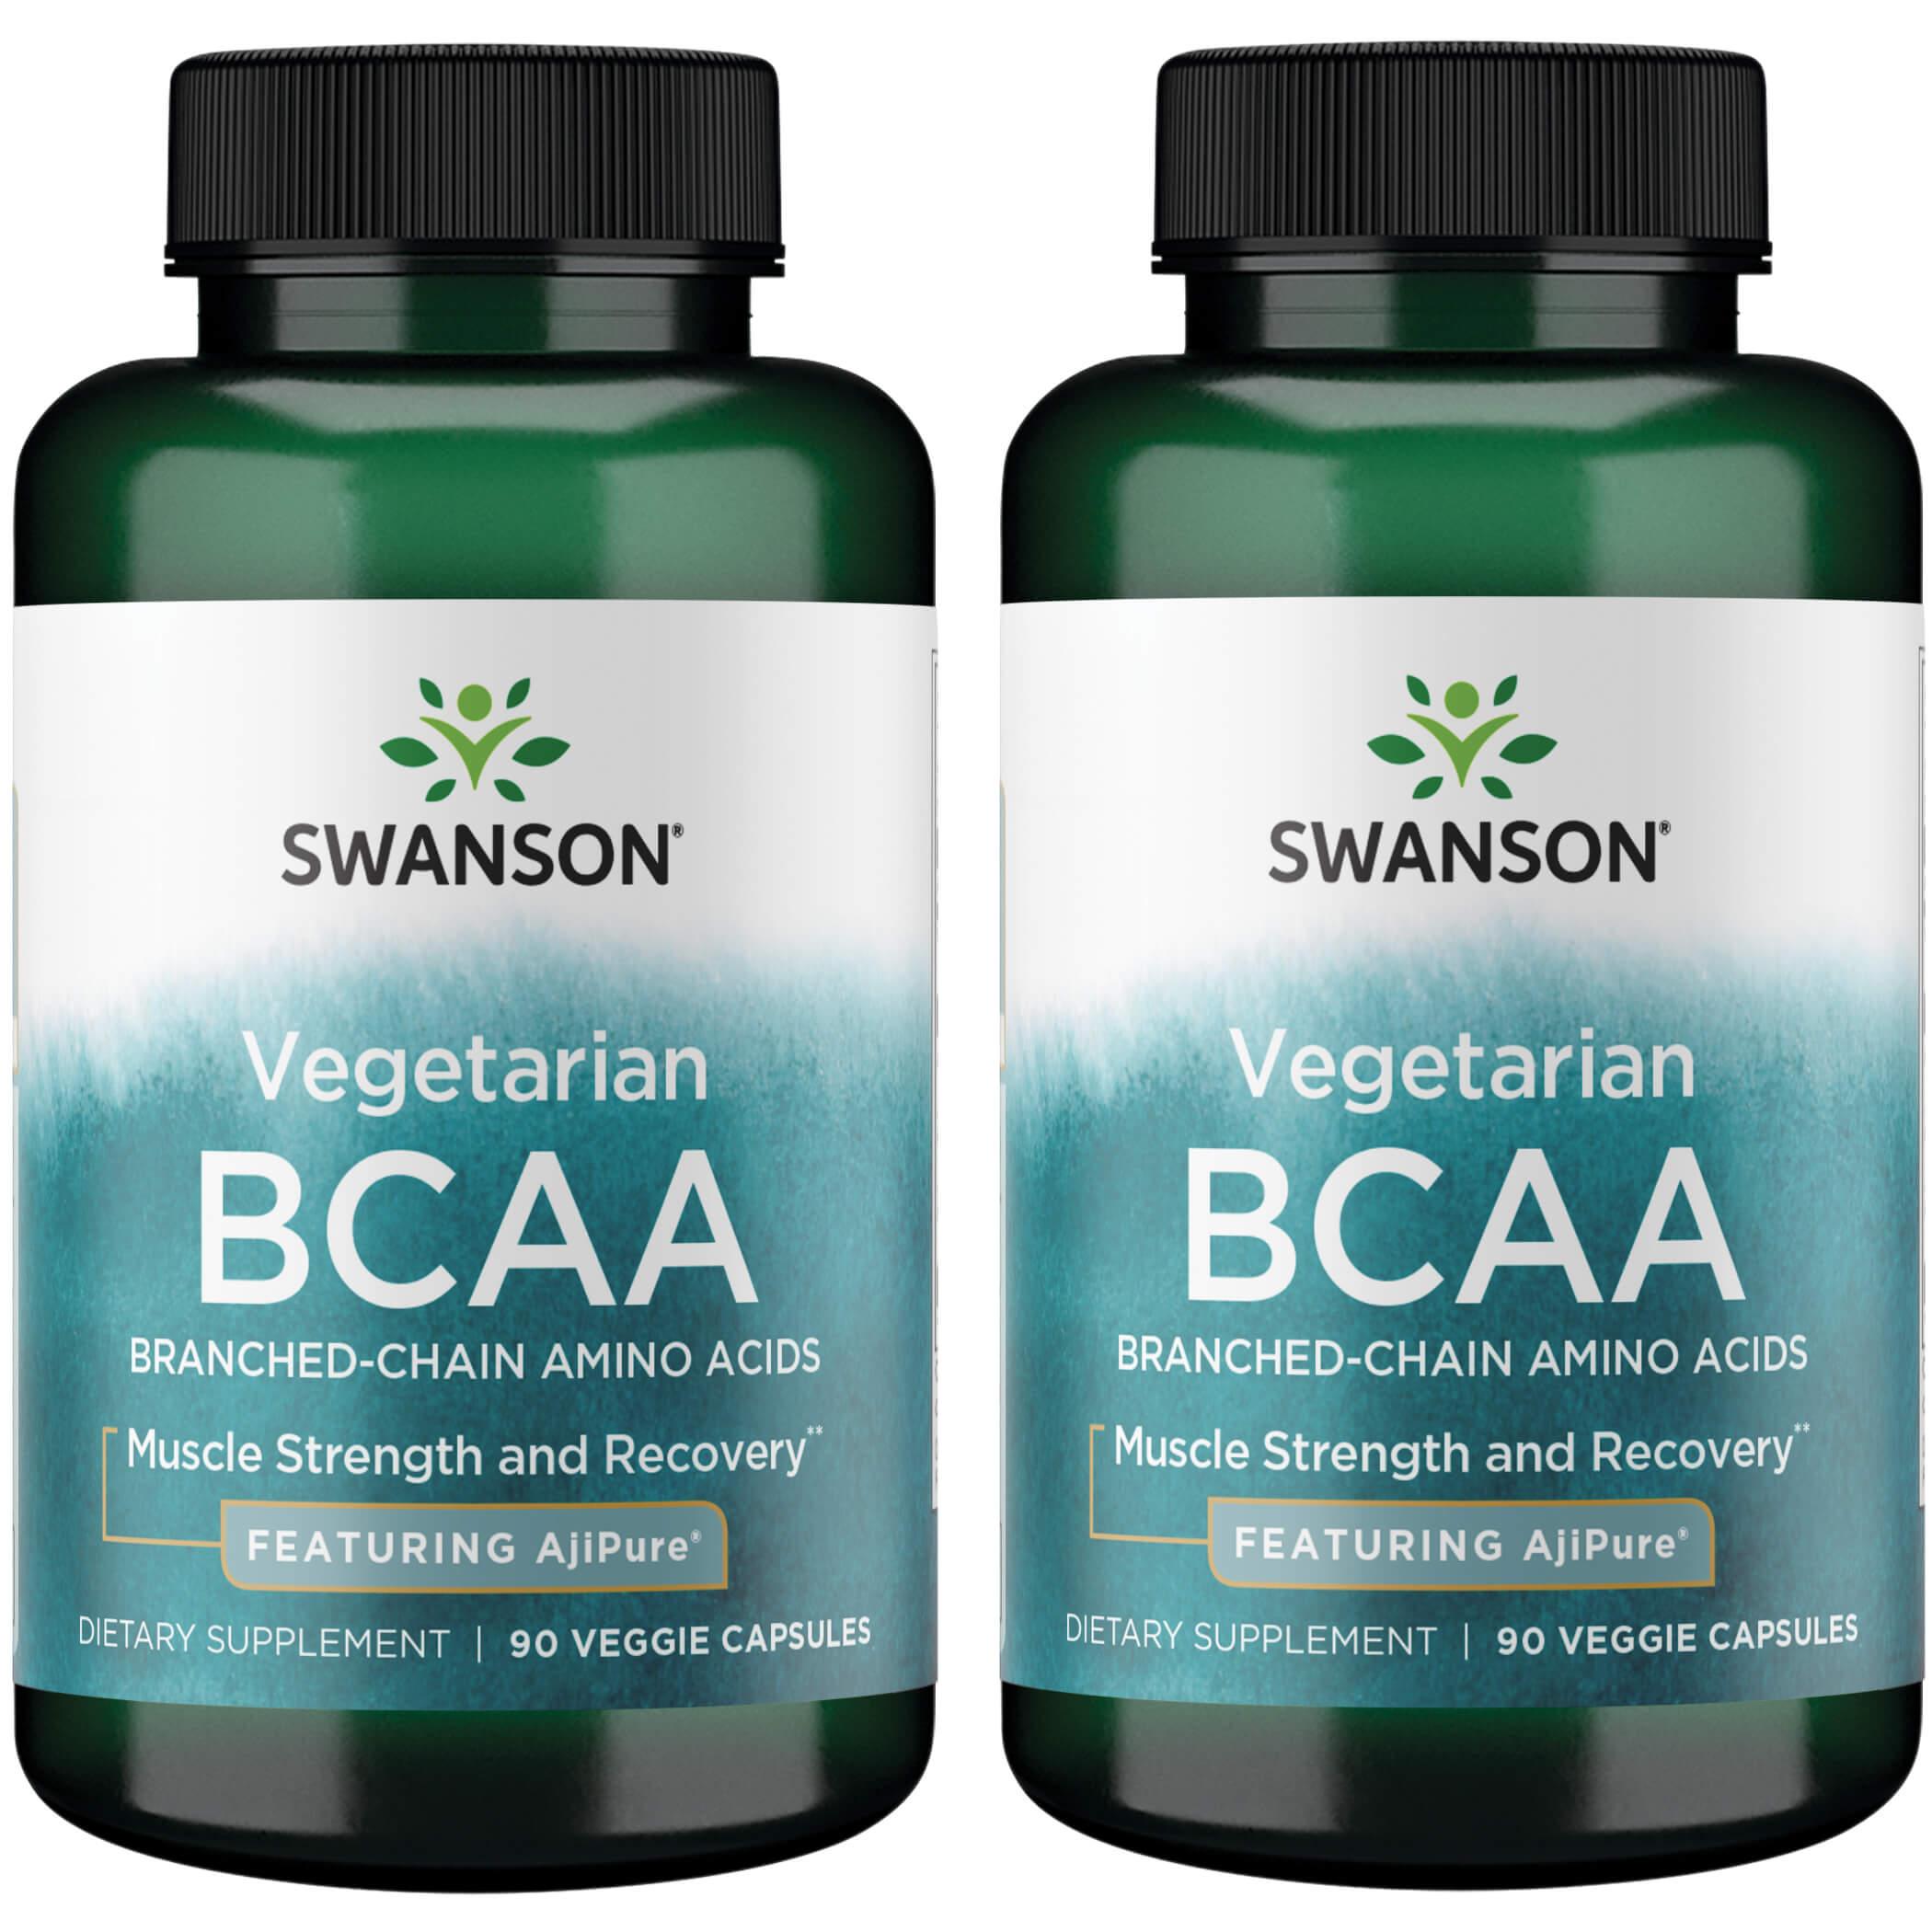 Swanson Ultra Vegetarian Bcaa - Featuring Ajipure 2 Pack Supplement Vitamin 90 Veg Caps